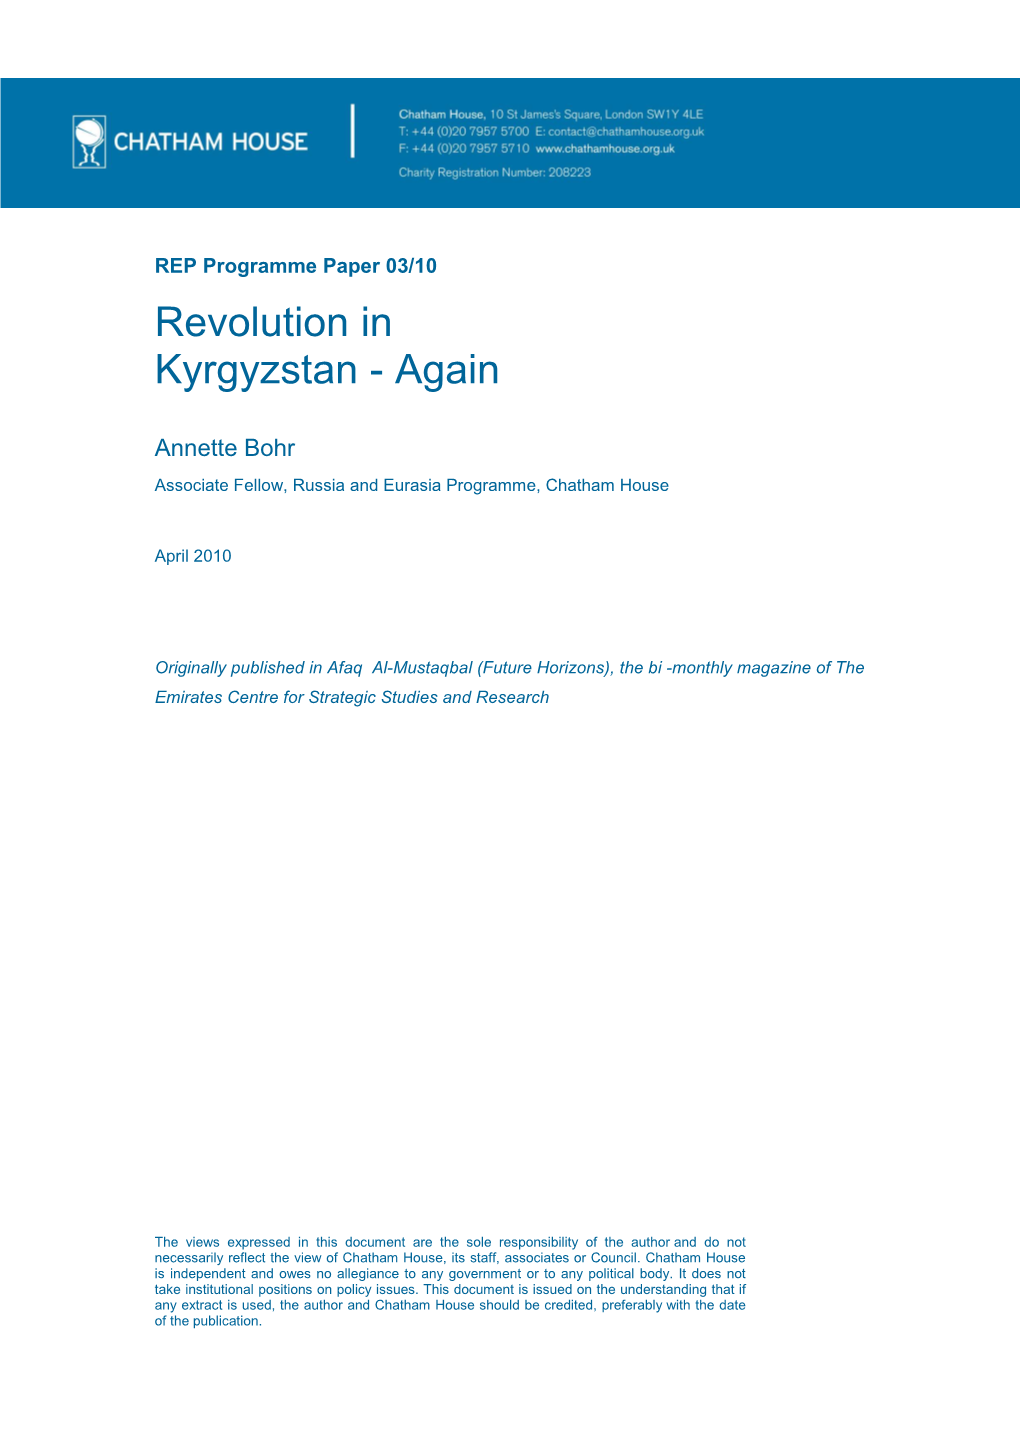 Revolution in Kyrgyzstan - Again